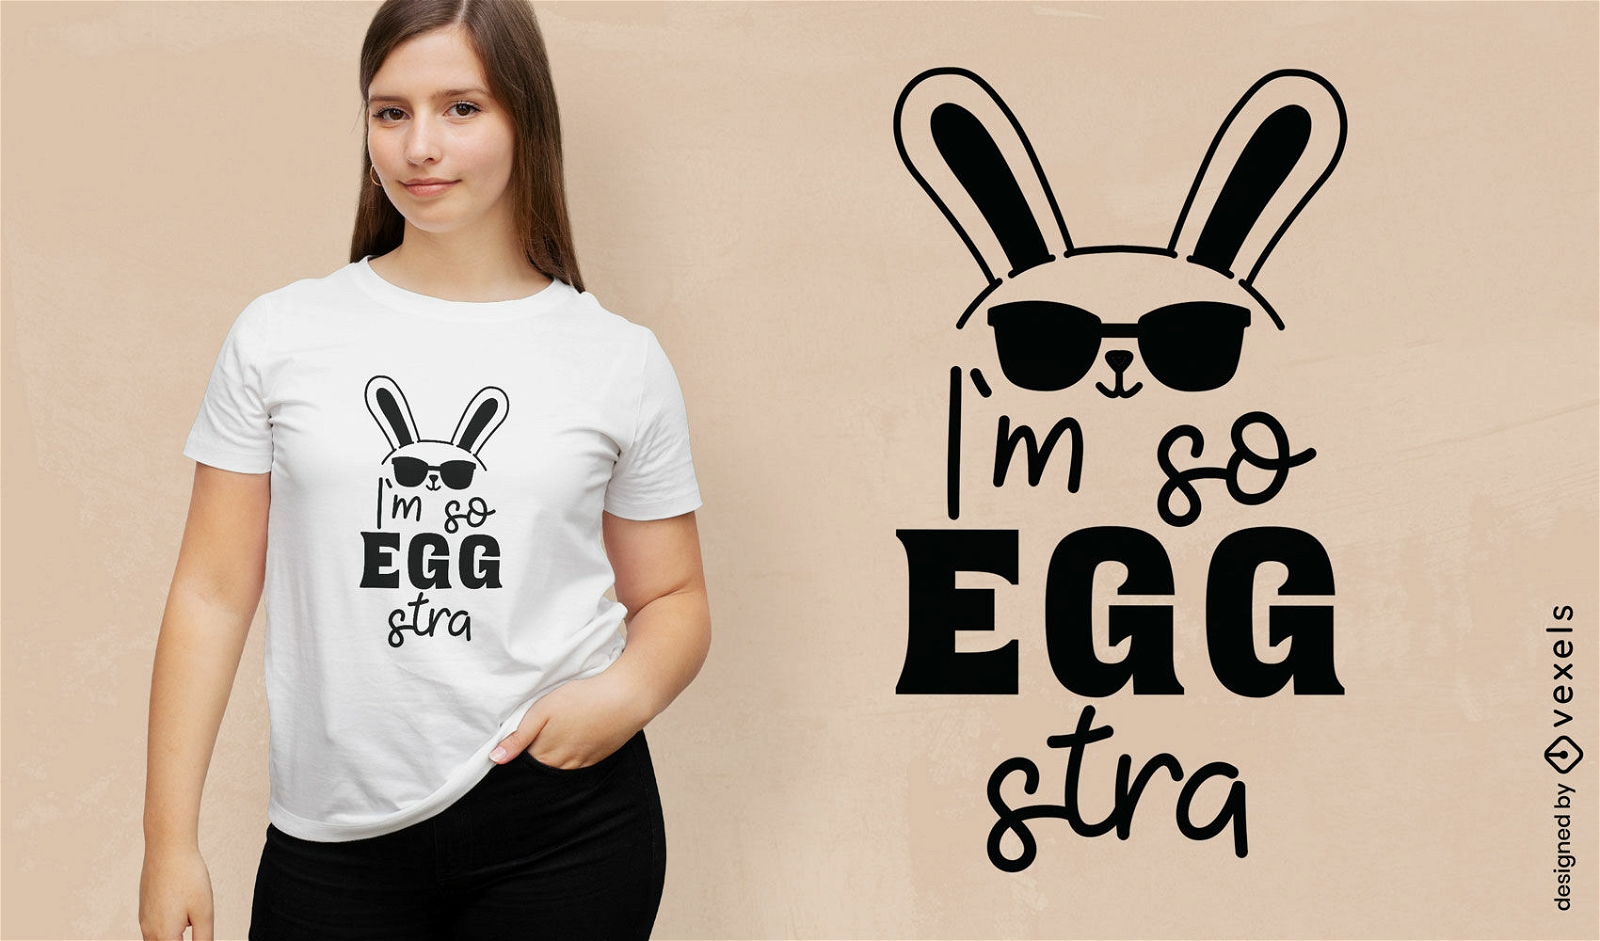 Bunny animal with glasses t-shirt design